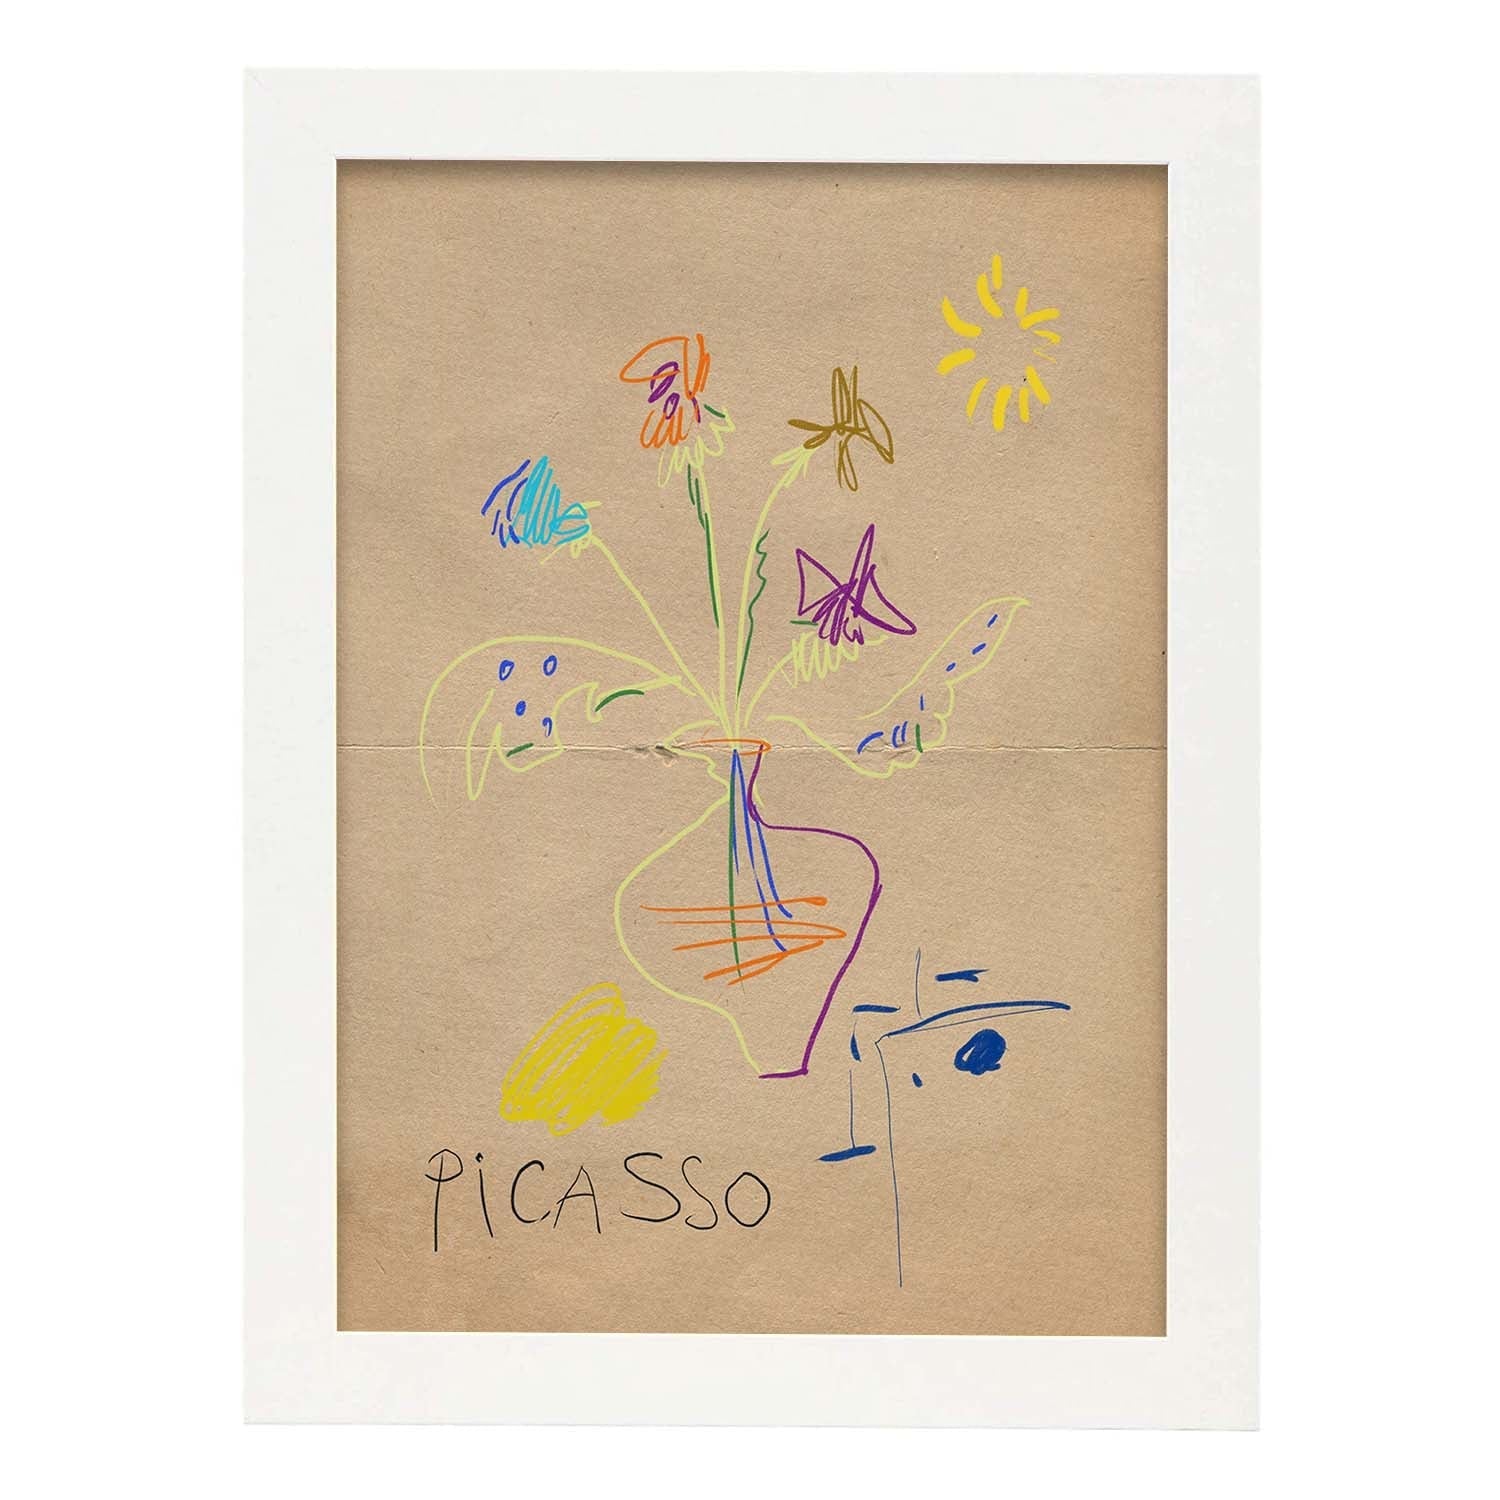 Lamina artistica decorativa con ilustración de Exposición Picasso 3-Artwork-Nacnic-A4-Marco Blanco-Nacnic Estudio SL